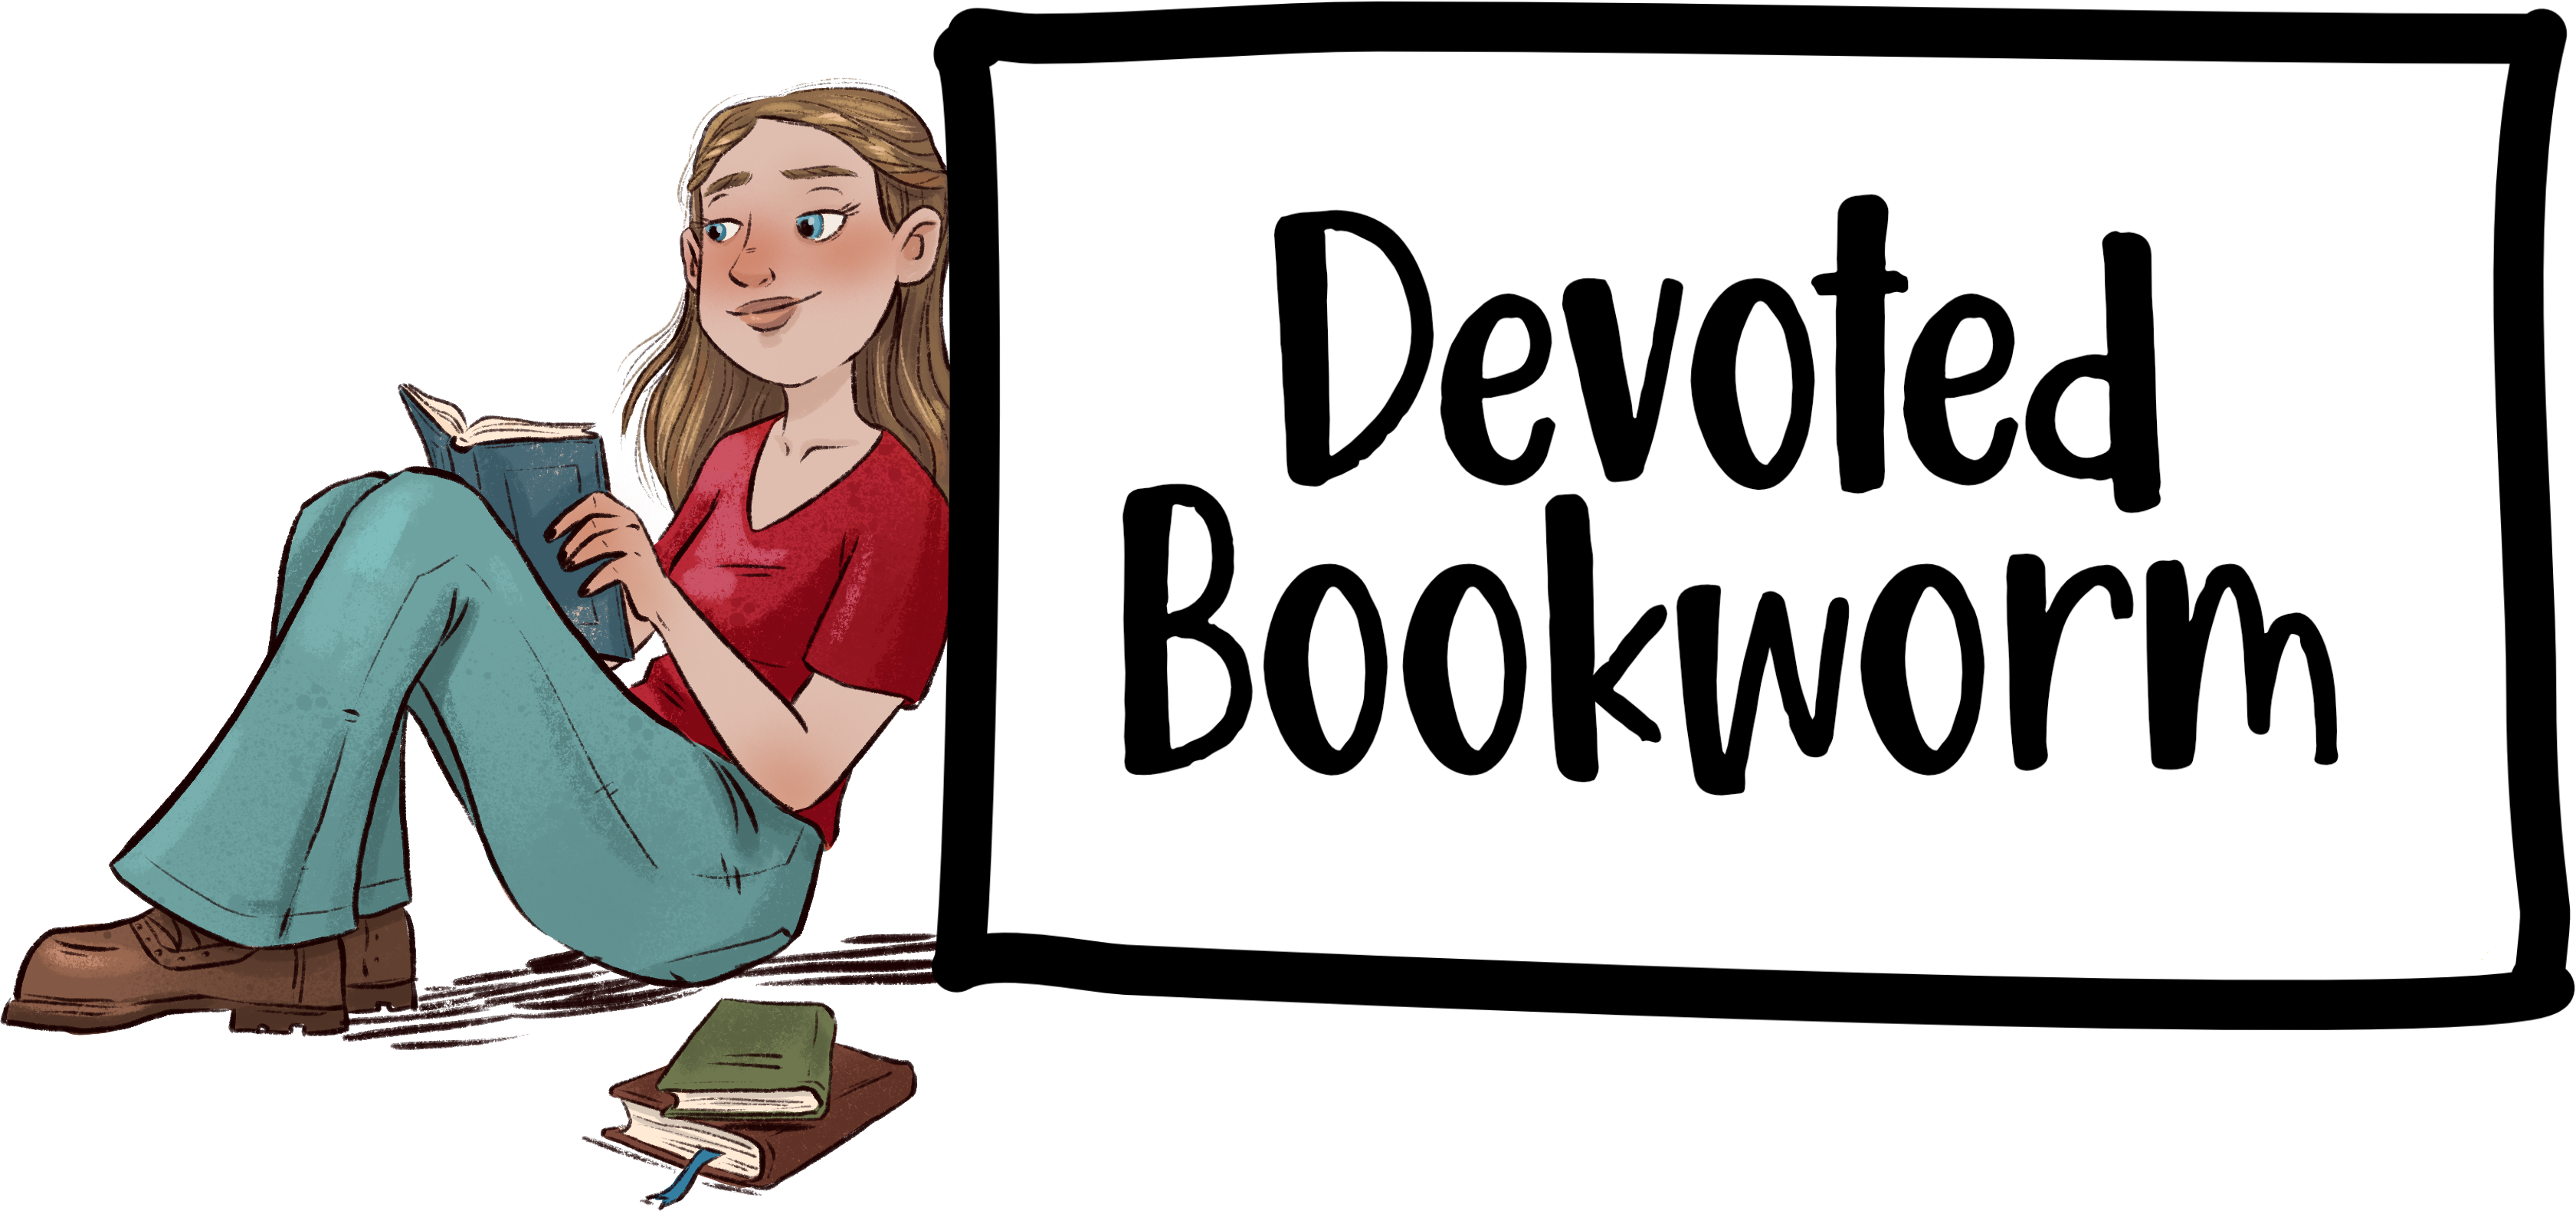 Devoted Bookworm